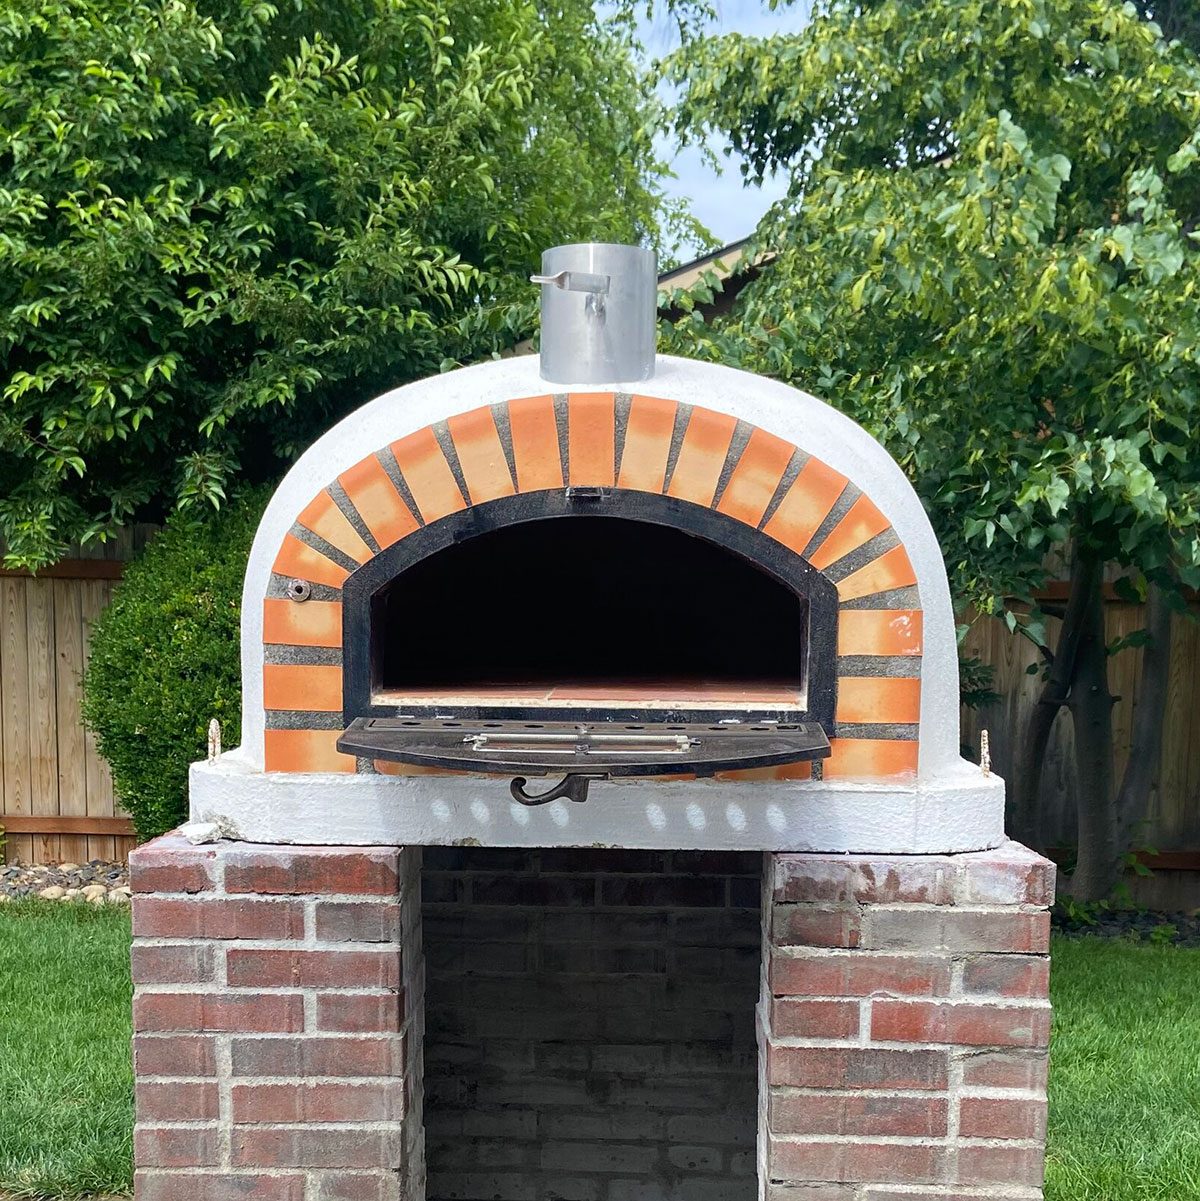 https://www.tasteofhome.com/wp-content/uploads/2022/05/built-in-wood-fired-pizza-oven-via-wayfair.com-ecomm.jpg?fit=700%2C701